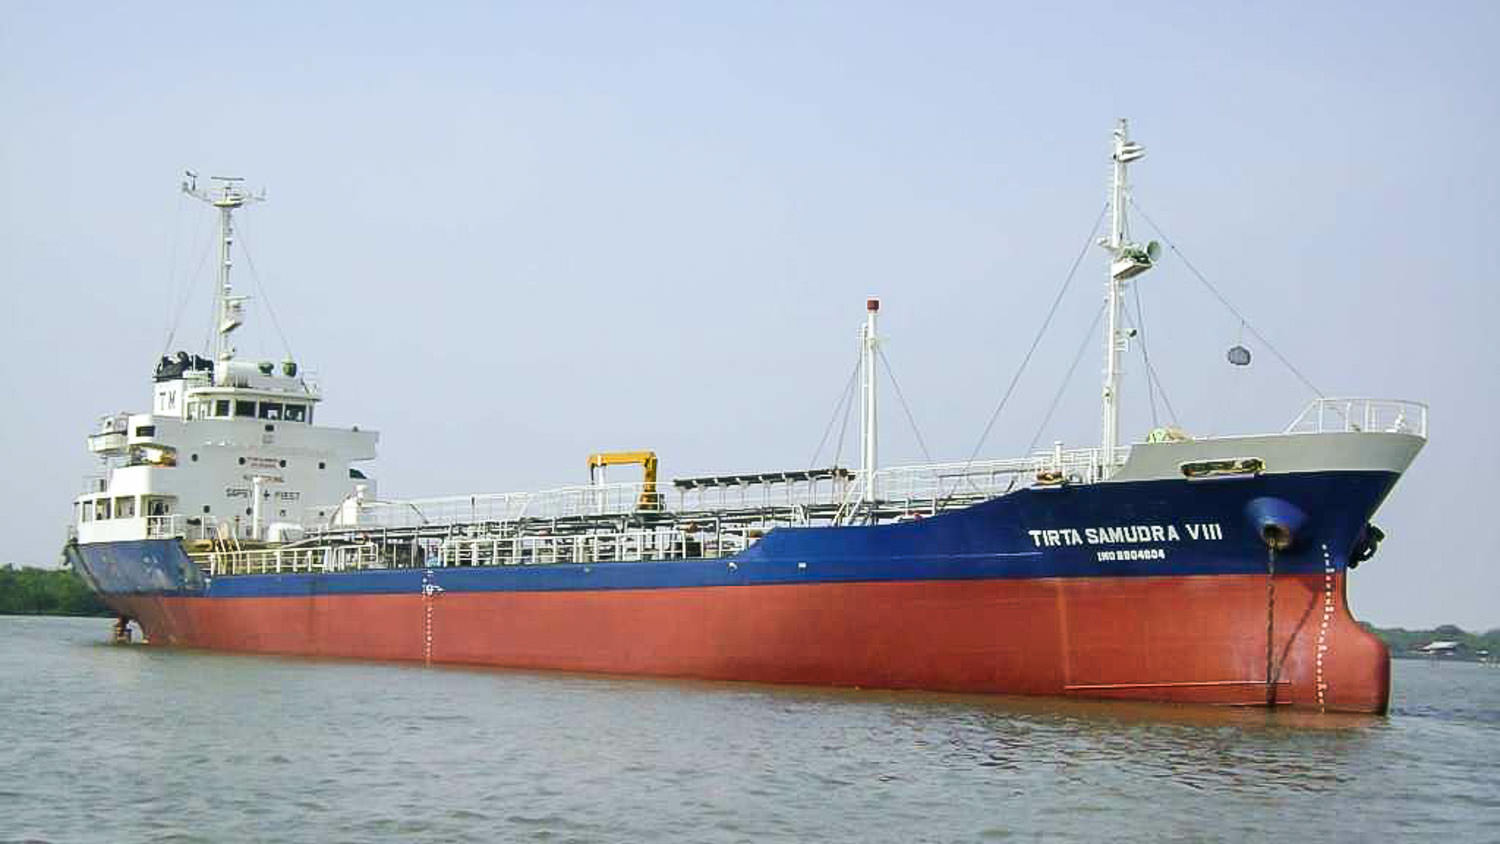 Kapal Ship Vessel SPOB Tanker Tugboat Barge Tongkang PT Usda Seroja Jaya Rengat Batam Shipyard Shipping Indonesia